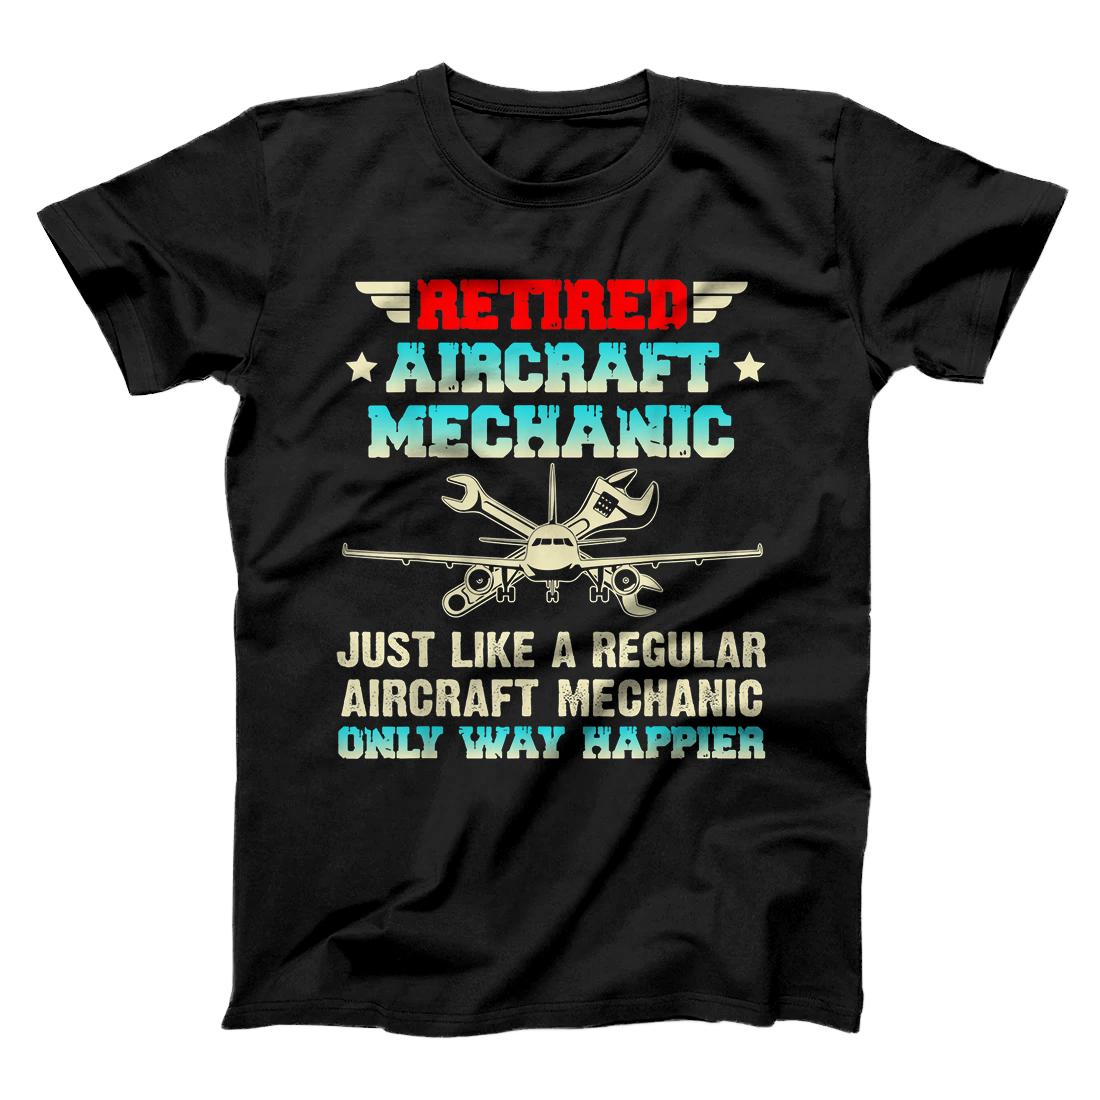 Personalized Retired Aircraft Mechanic Regular Aircraft Mechanic Gifts T-Shirt